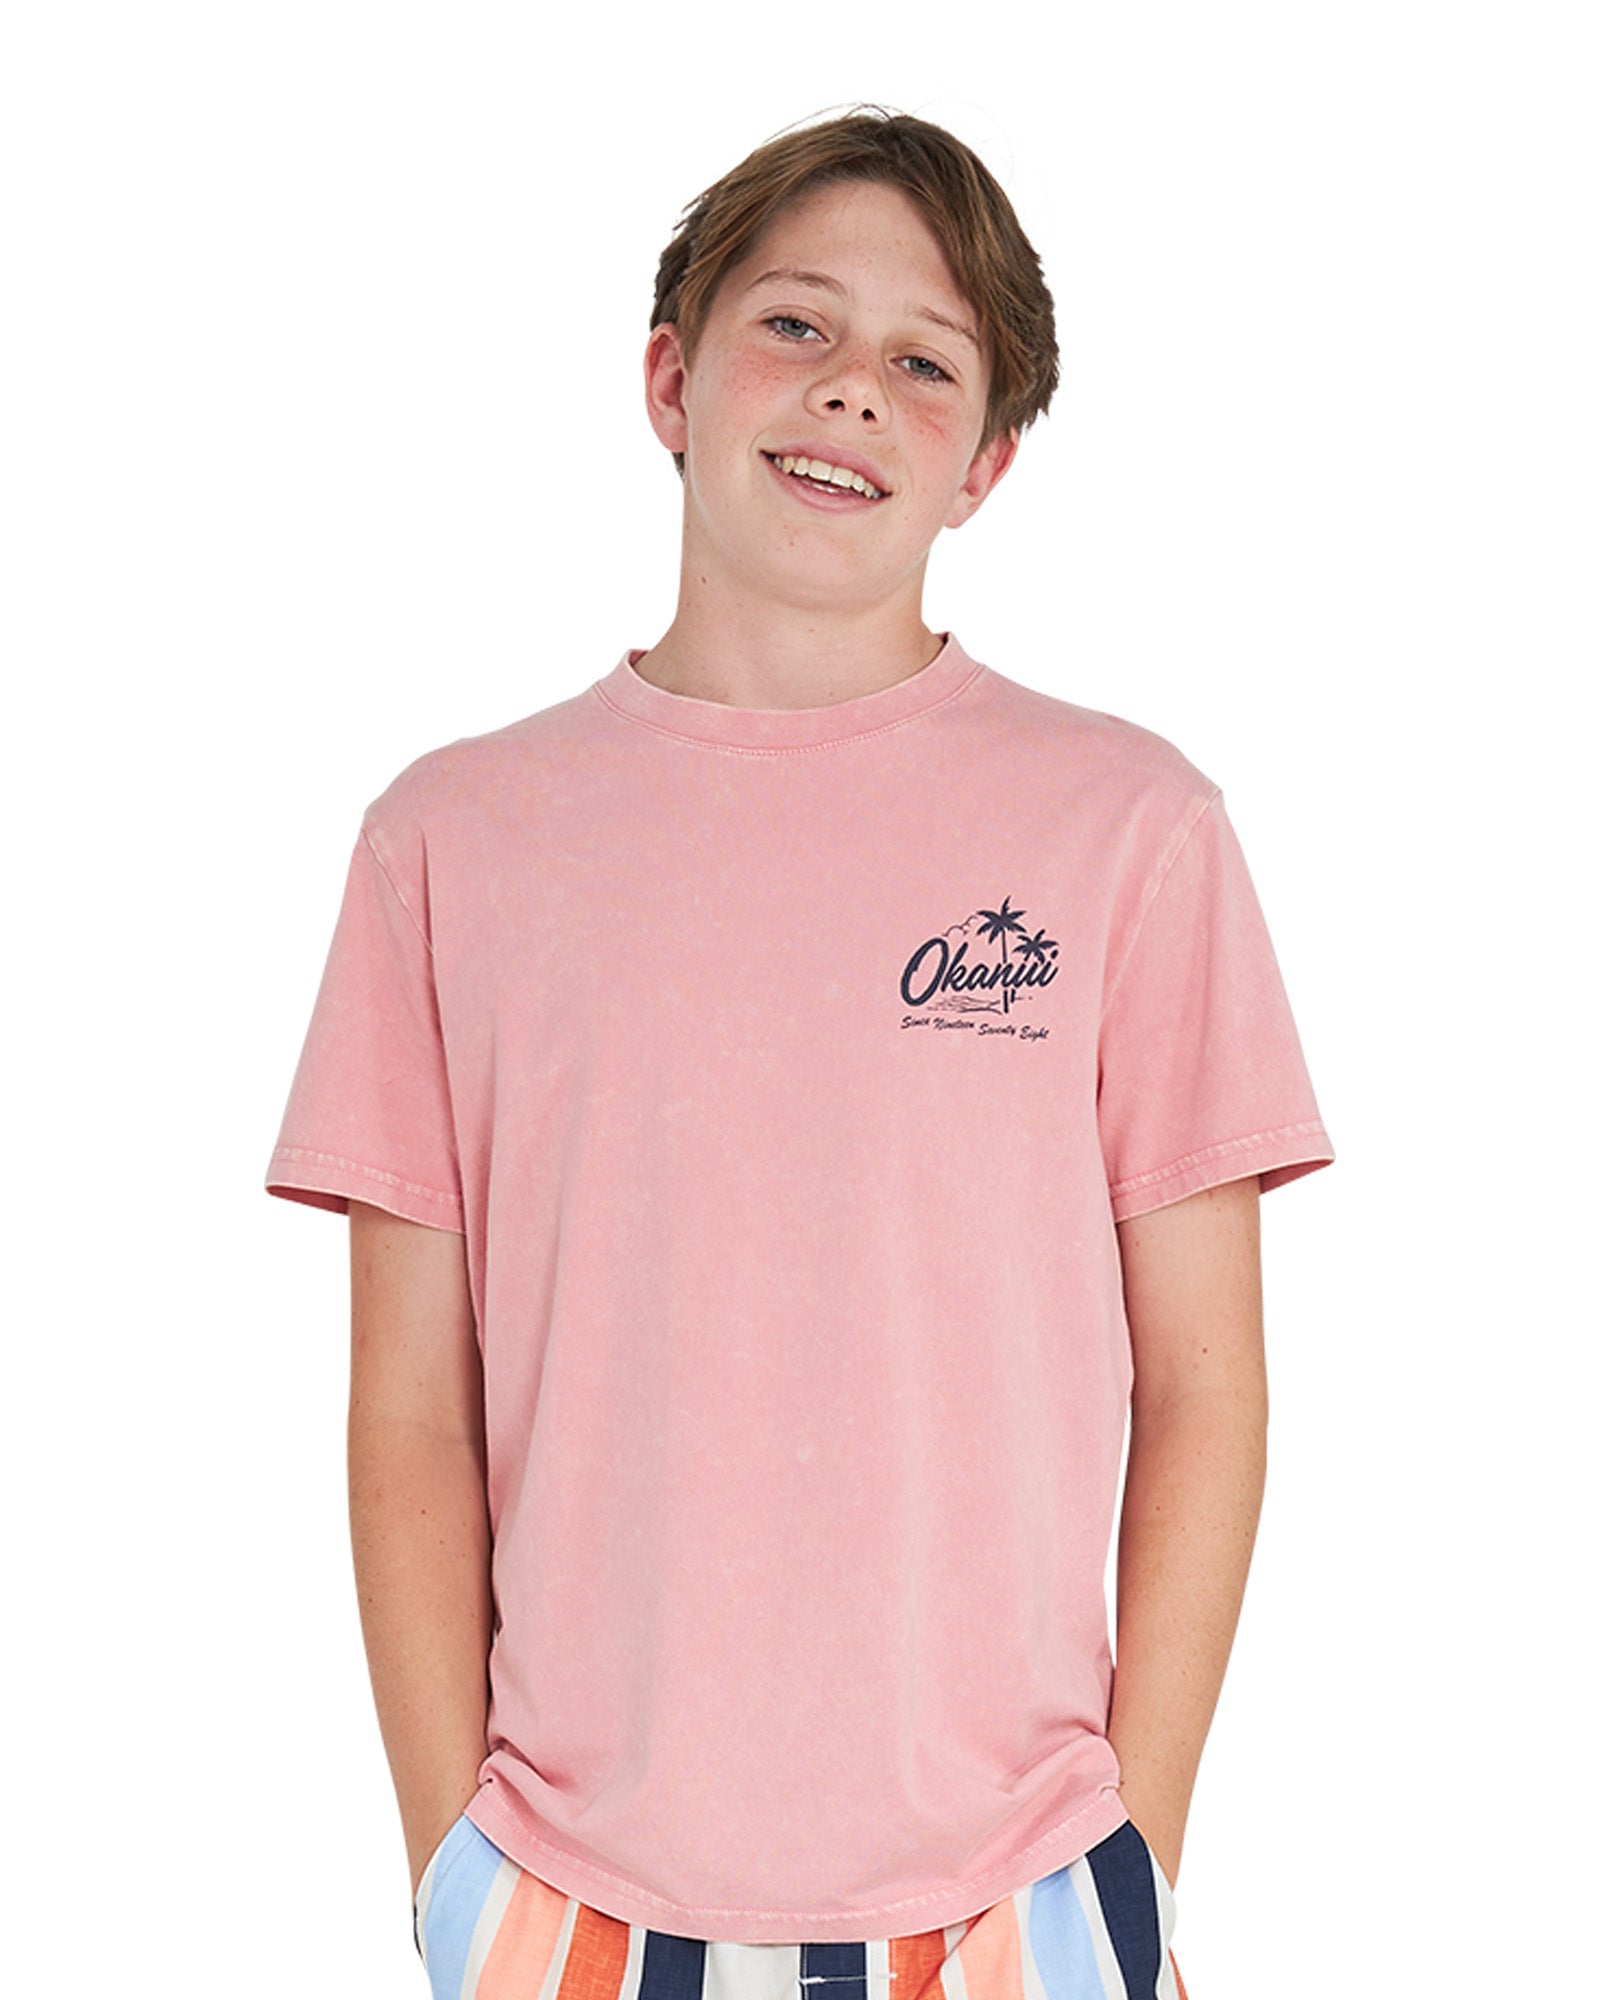 Boys - T-Shirt - Postcards - Washed Pink